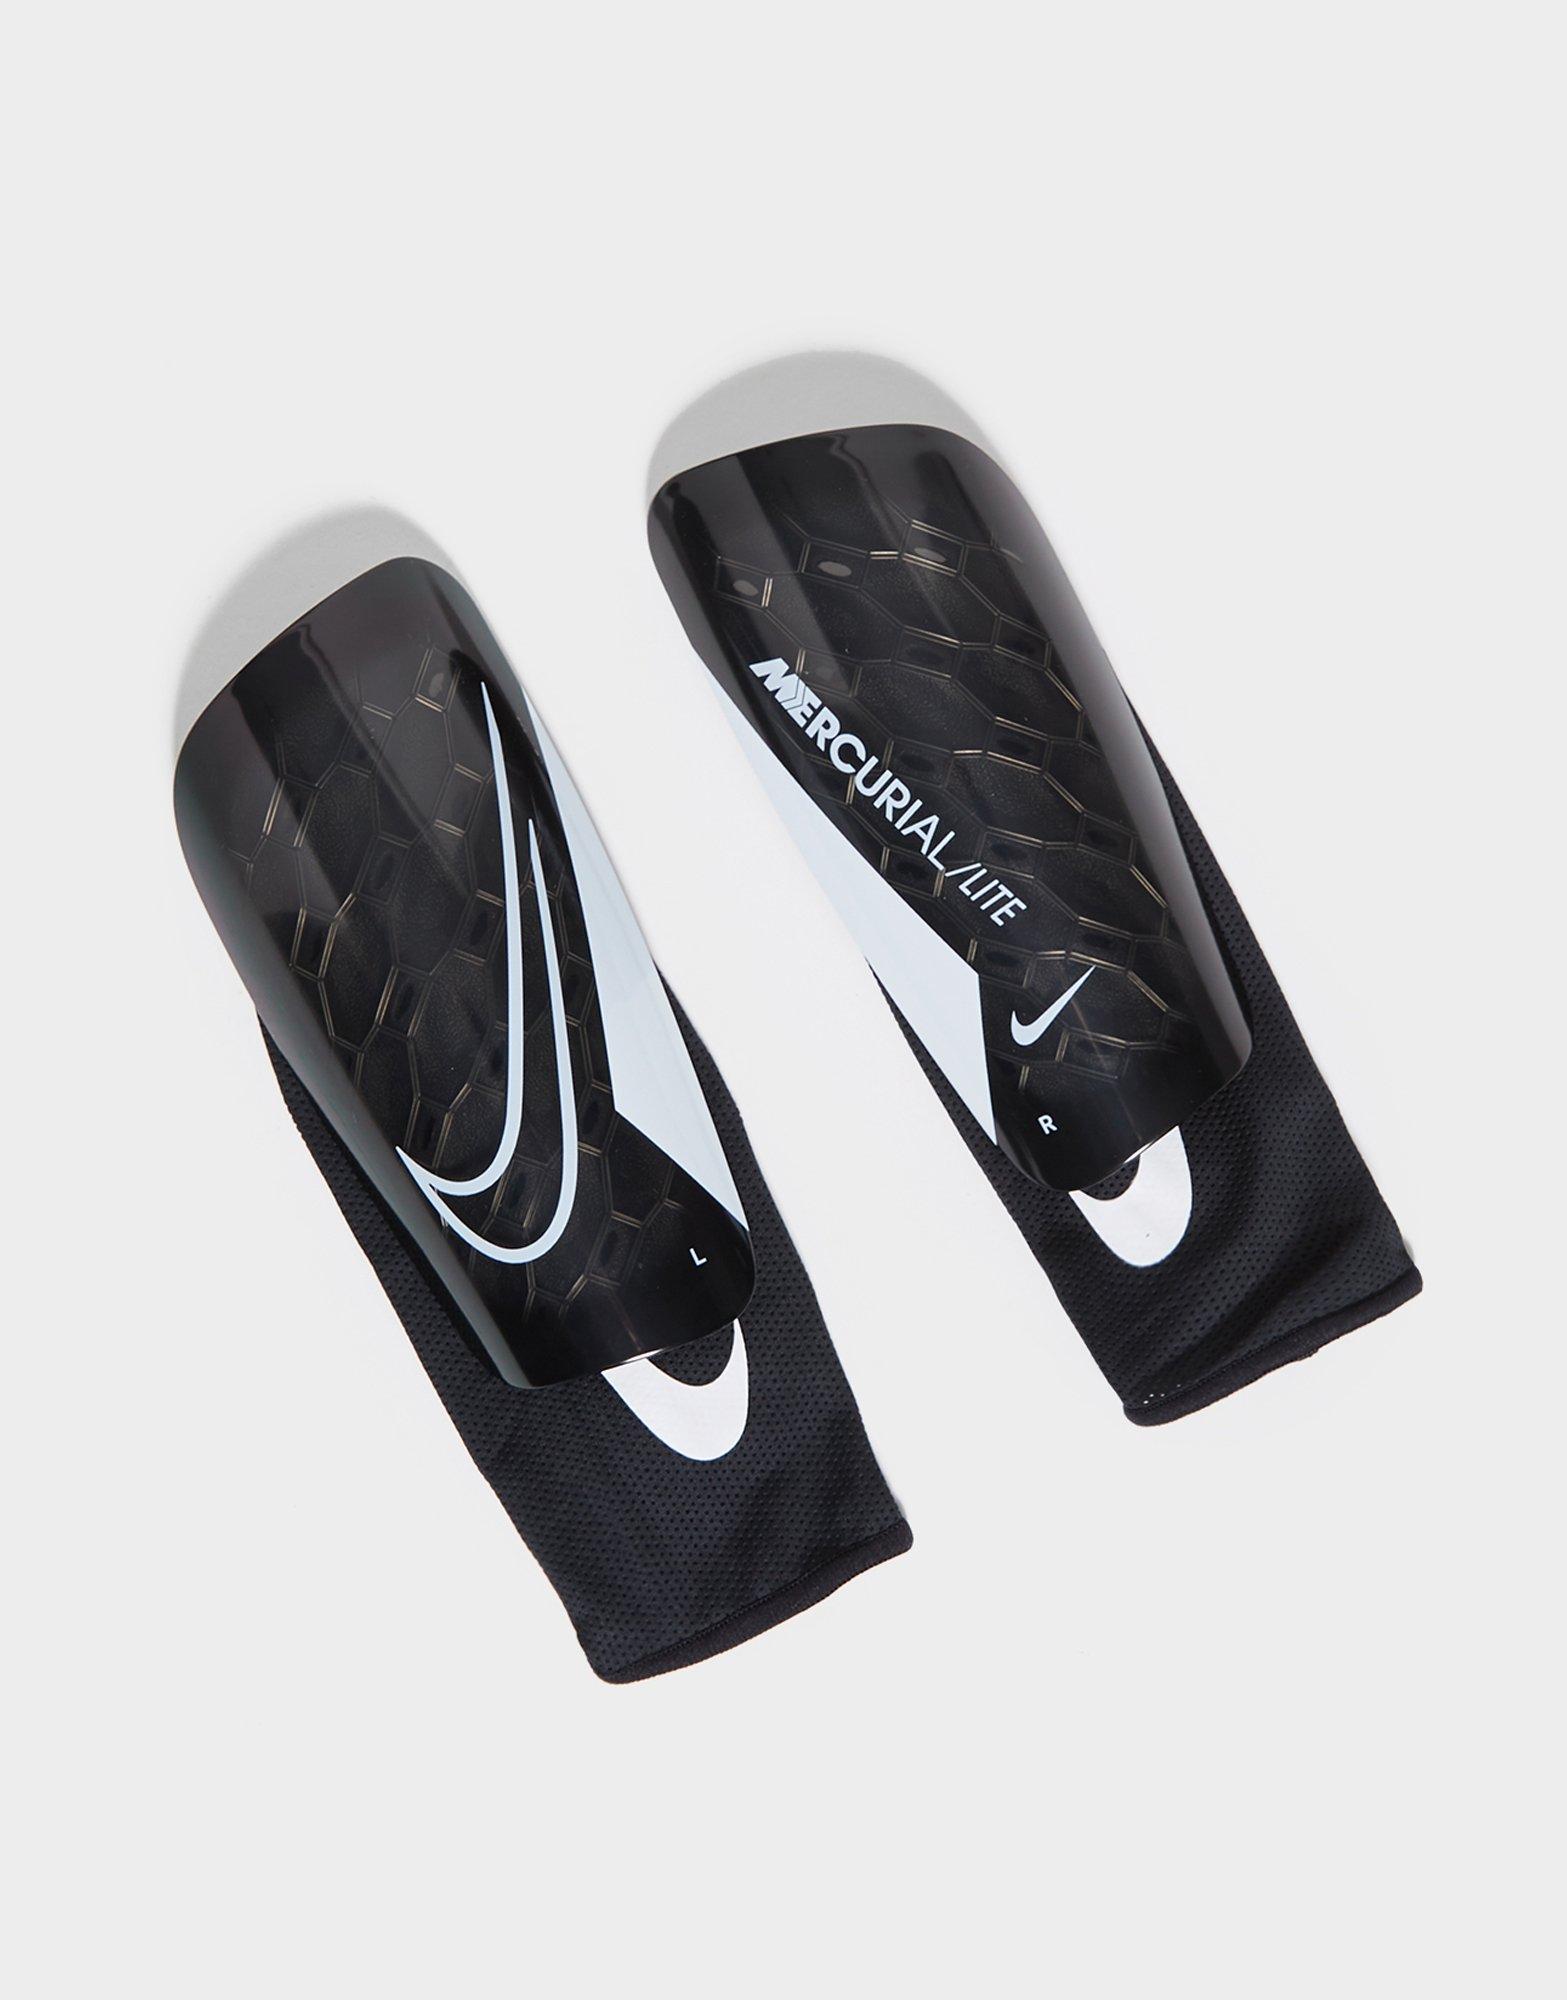 Nike Football - Manches pour protège-tibias - Noir SE0173-011